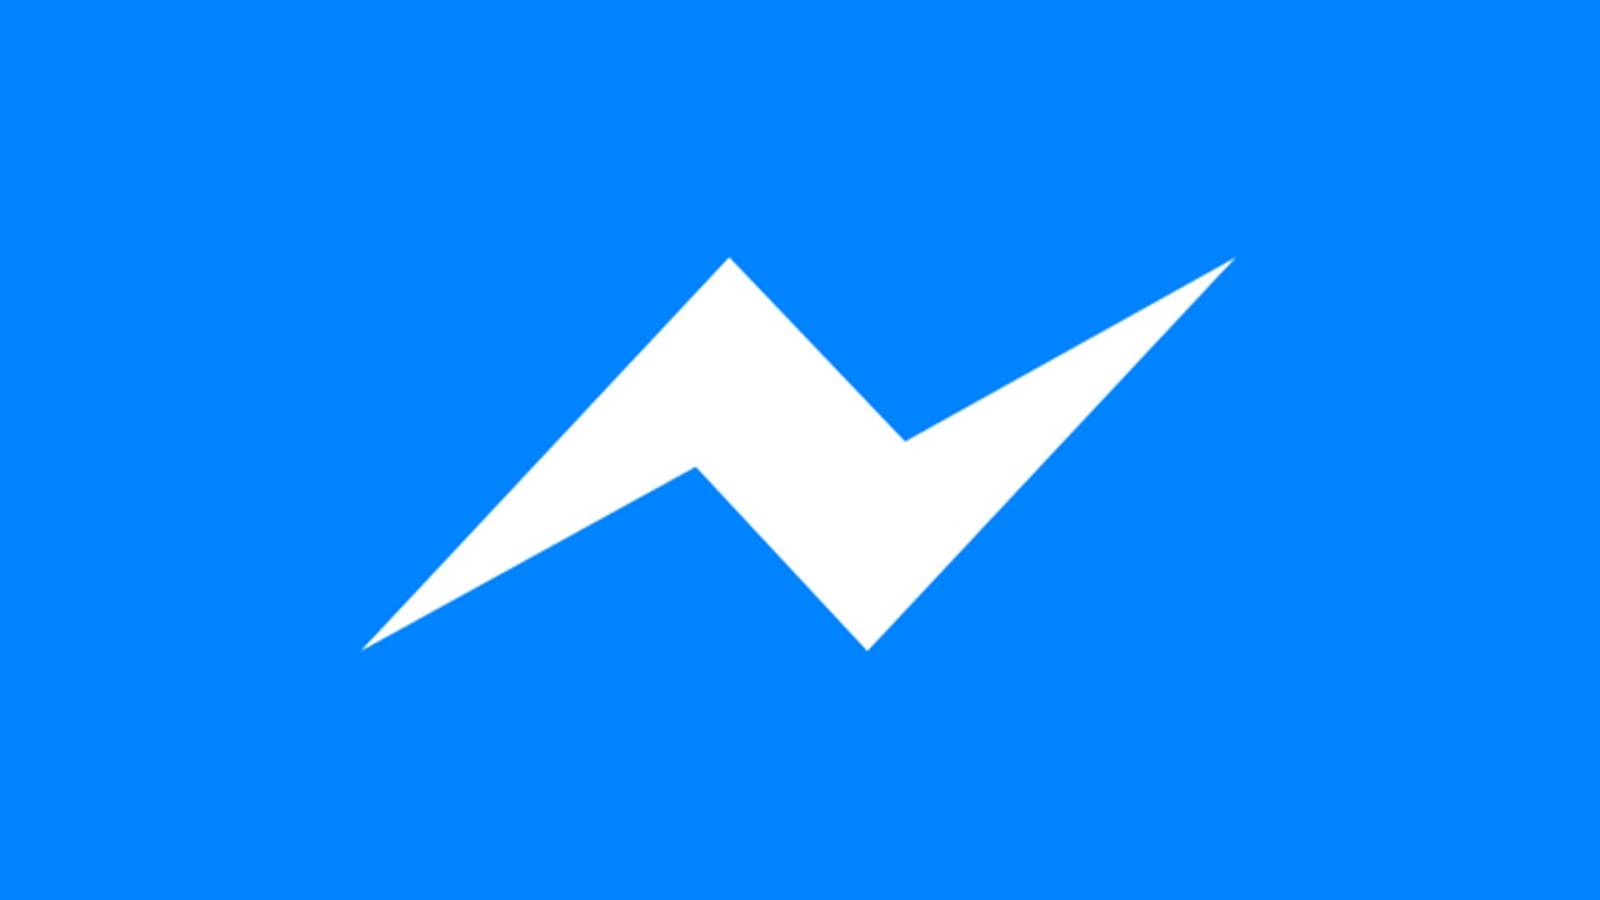 Facebook Messenger Update Nou in iPhone si Android ce Noutati sunt Oferite in Telefoane